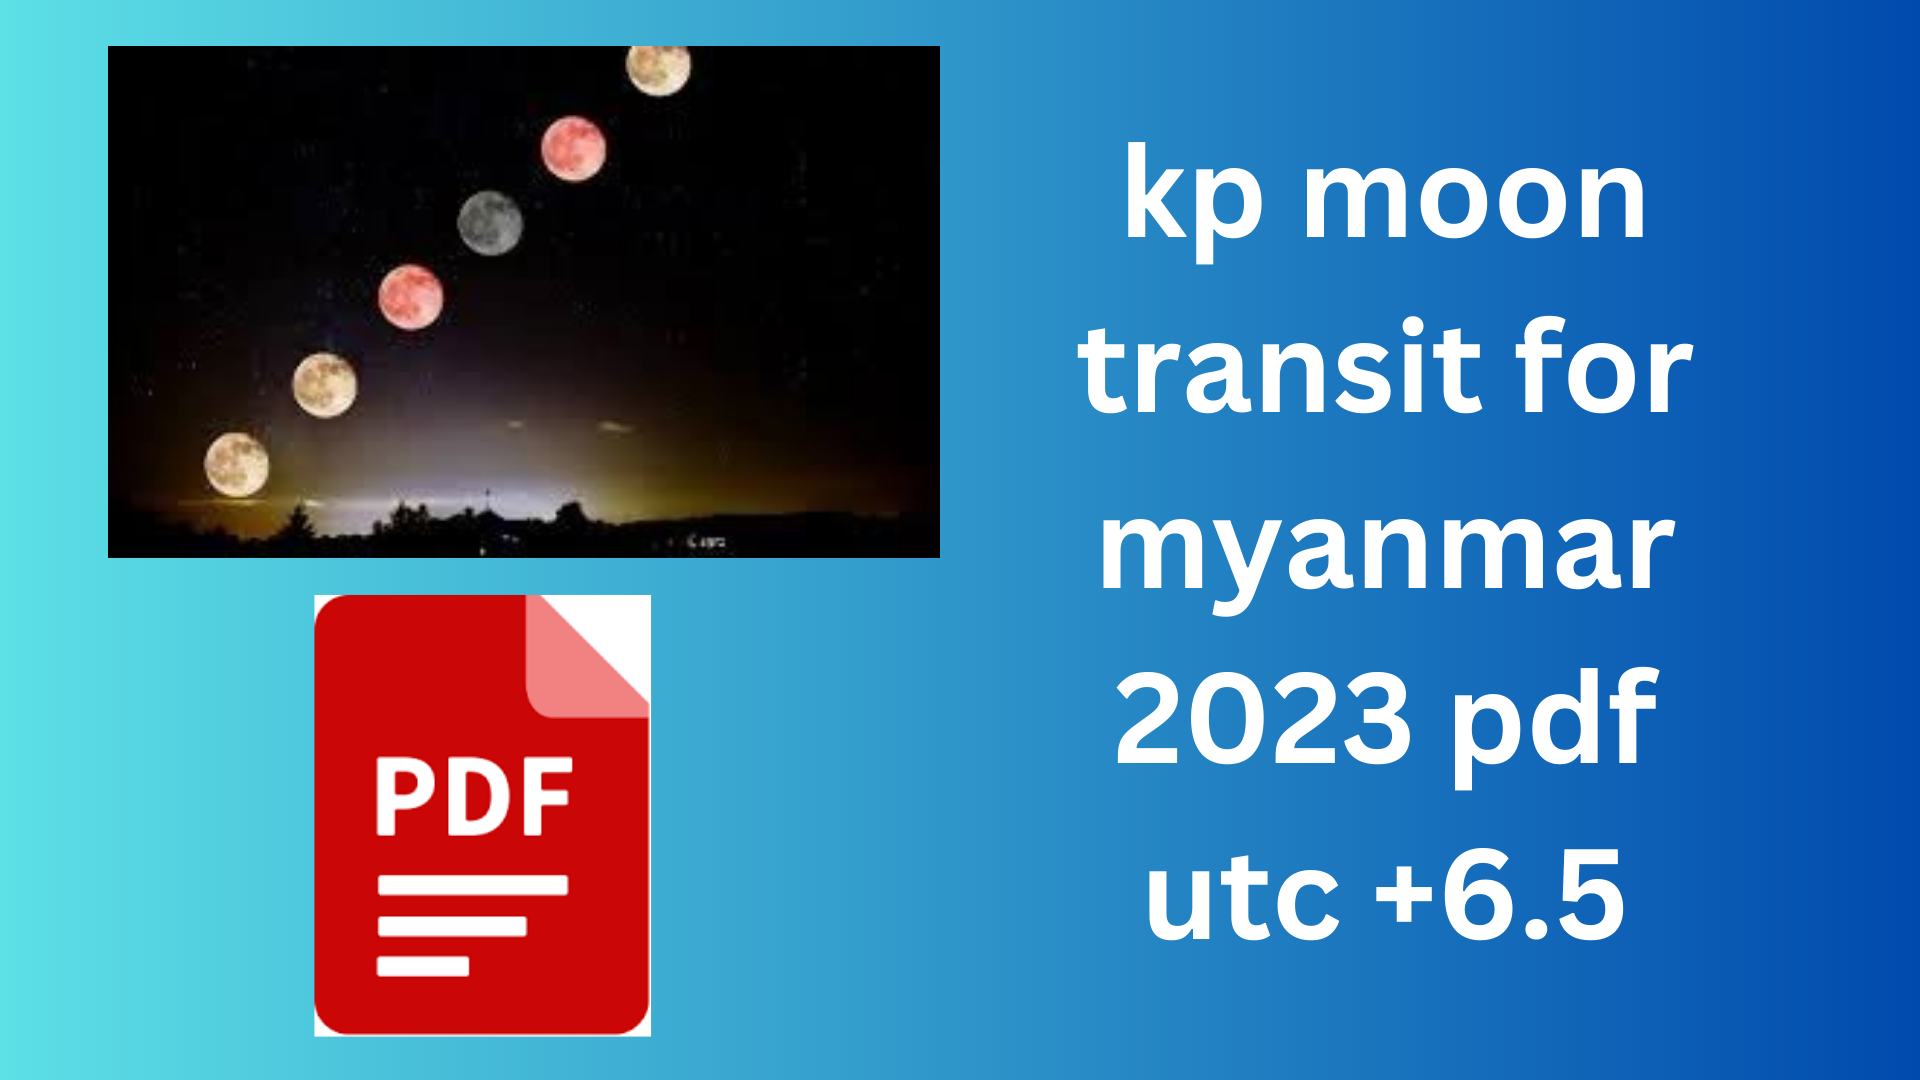 kp moon transit for myanmar 2023 pdf utc +6.5